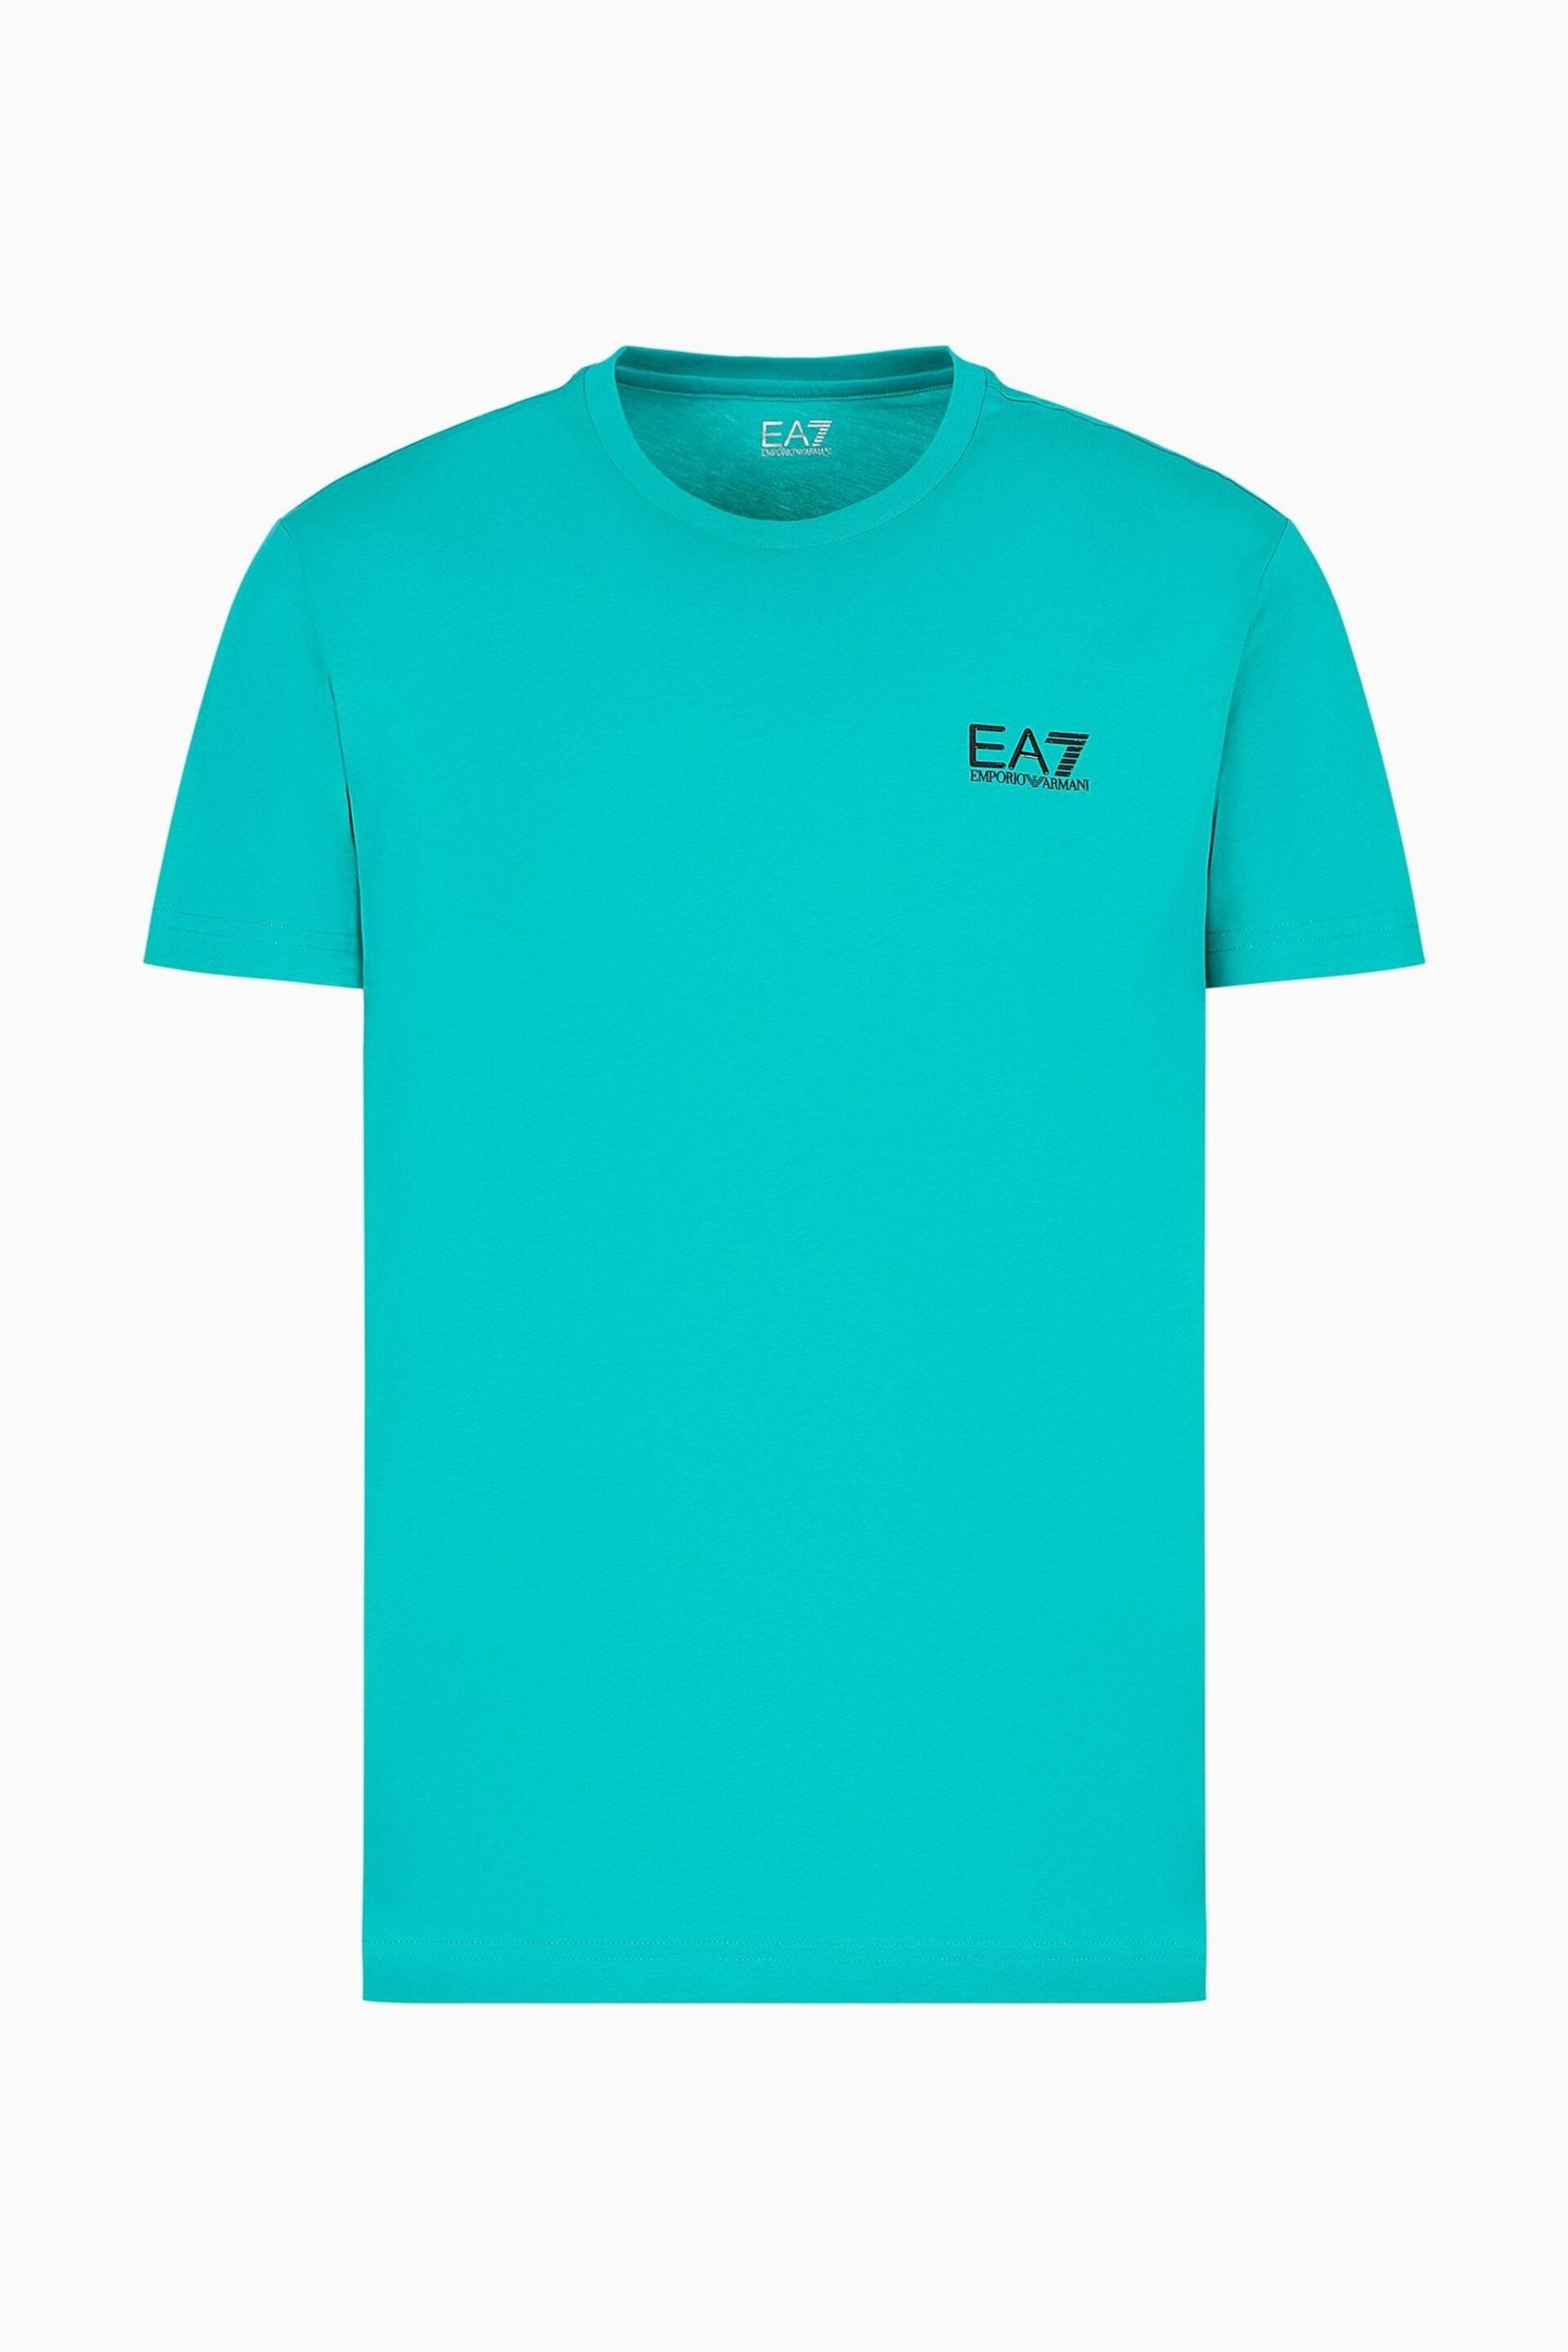 Emporio Armani EA7 Logo T-Shirt - Image 6 of 6